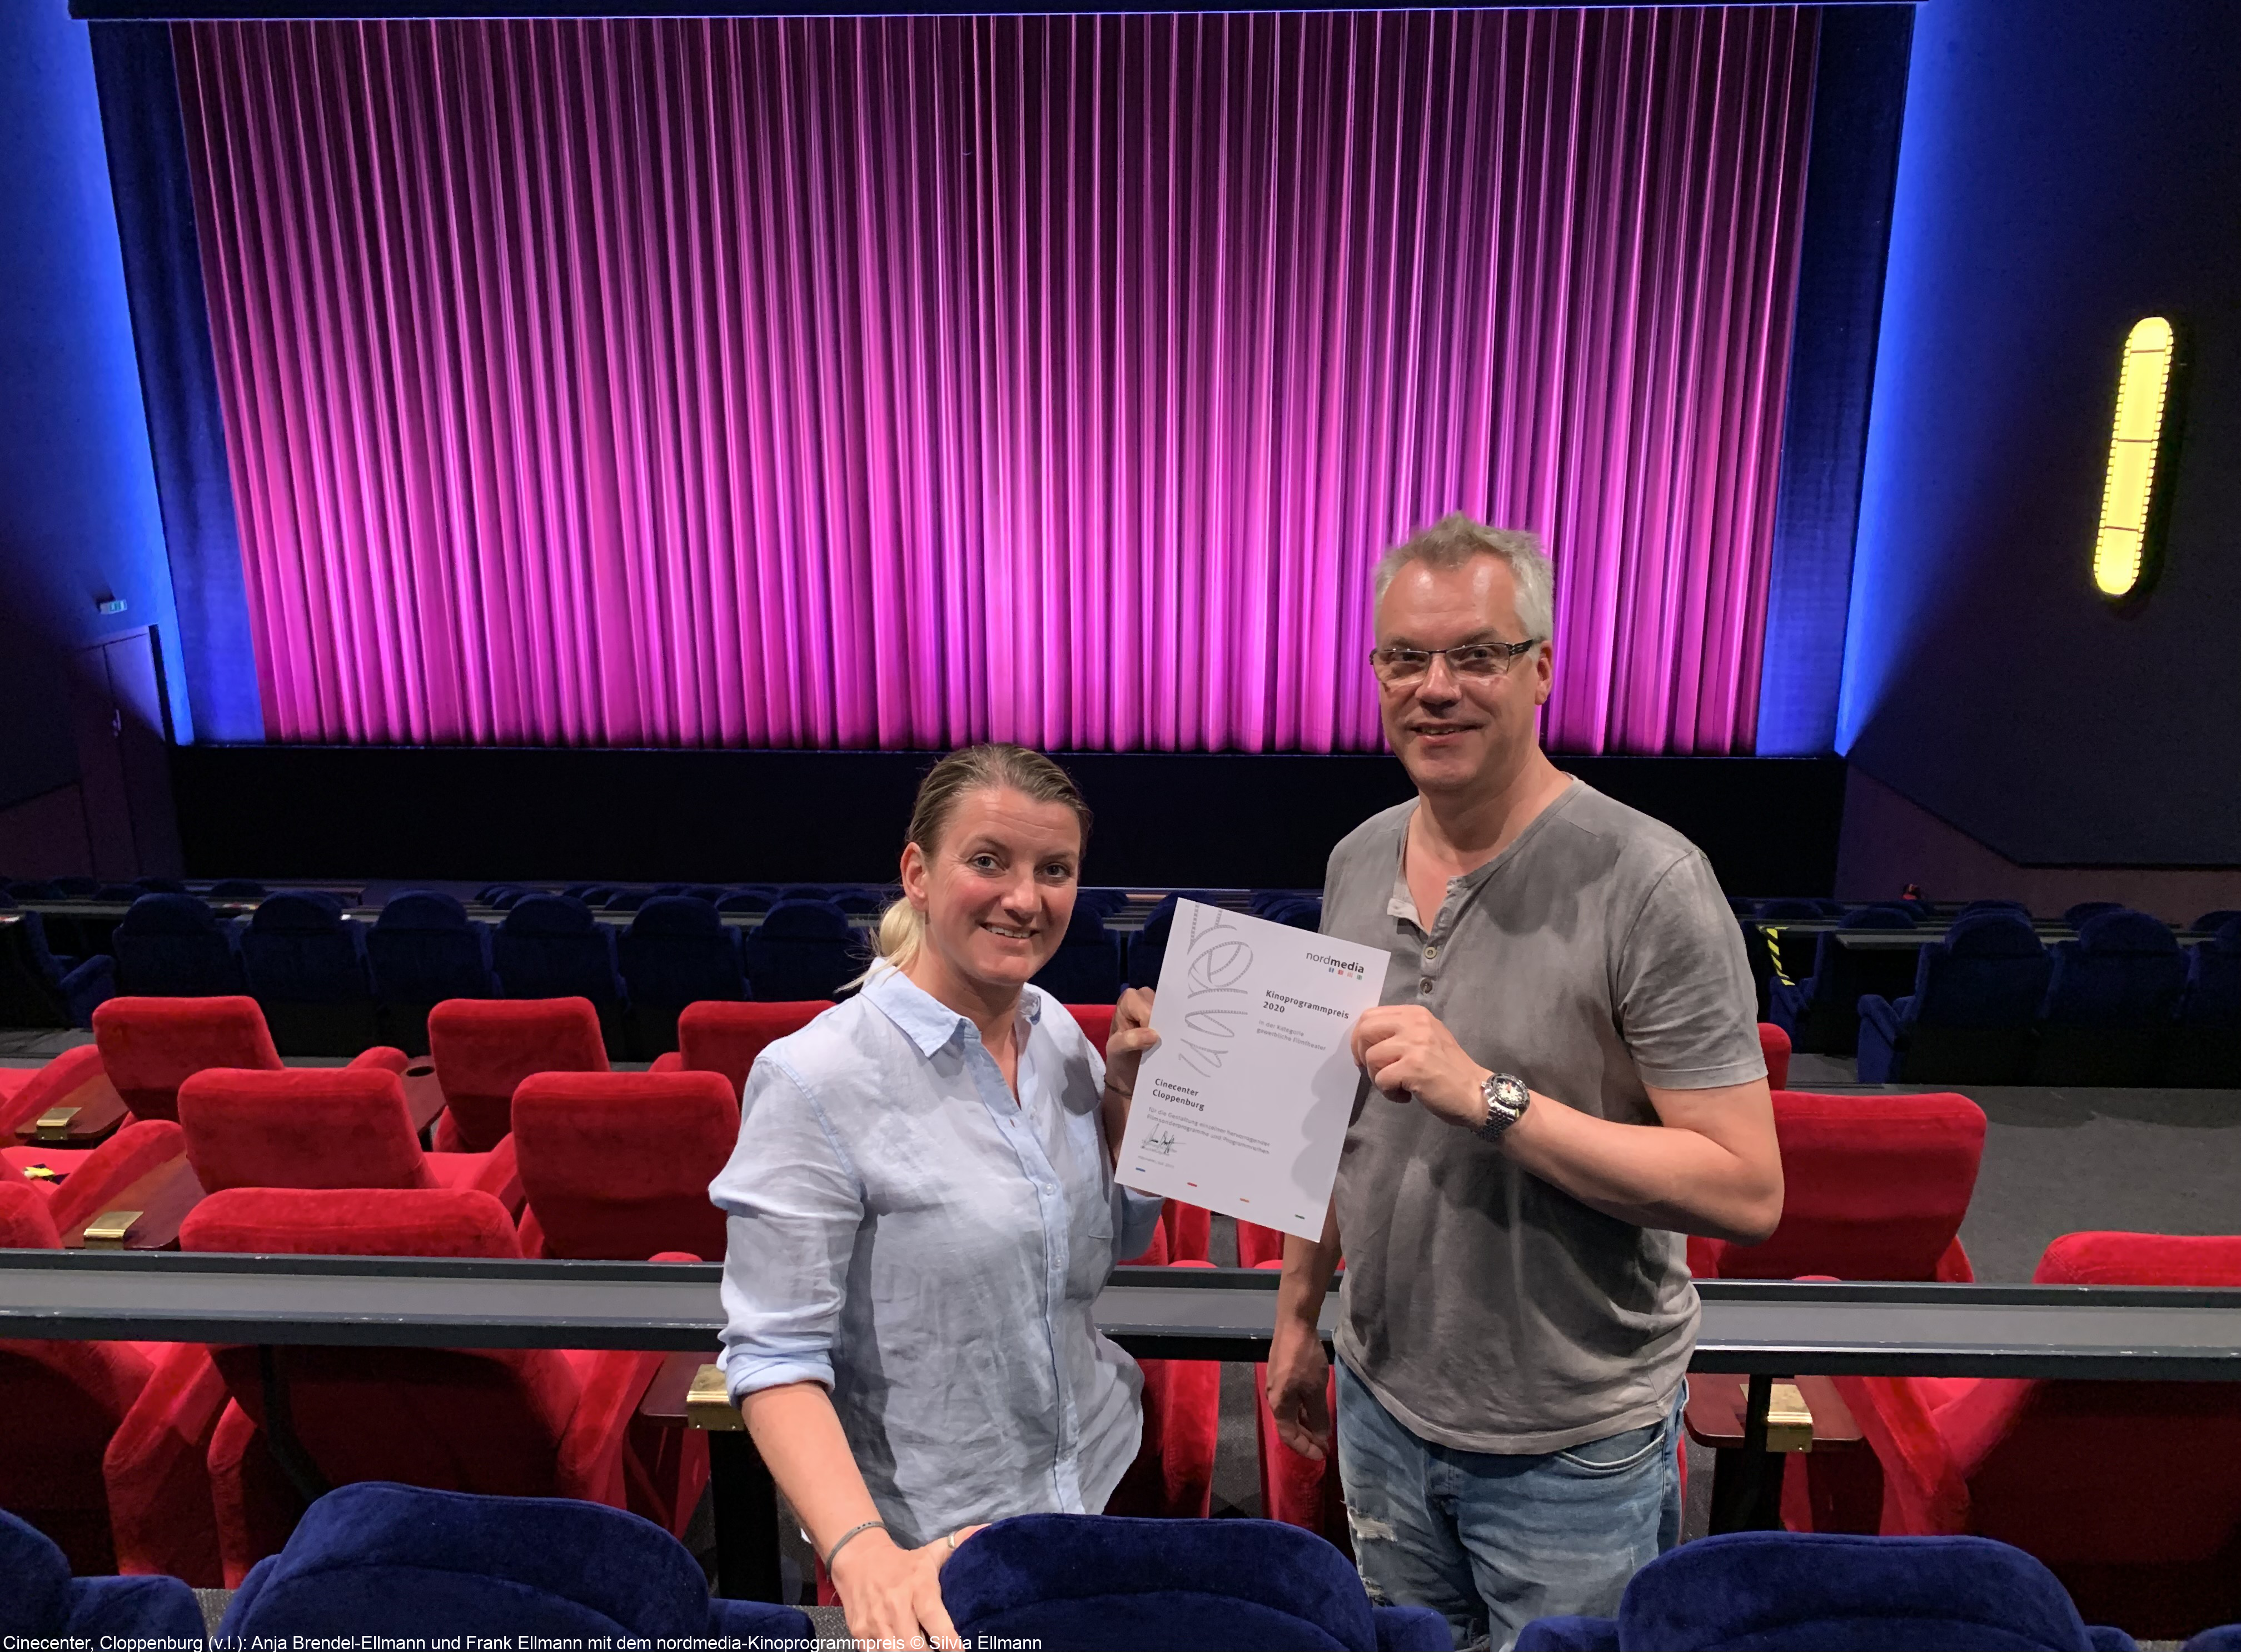 Cinecenter, Cloppenburg (v.l.): Anja Brendel-Ellmann und Frank Ellmann mit dem nordmedia-Kinoprogrammpreis © Silvia Ellmann